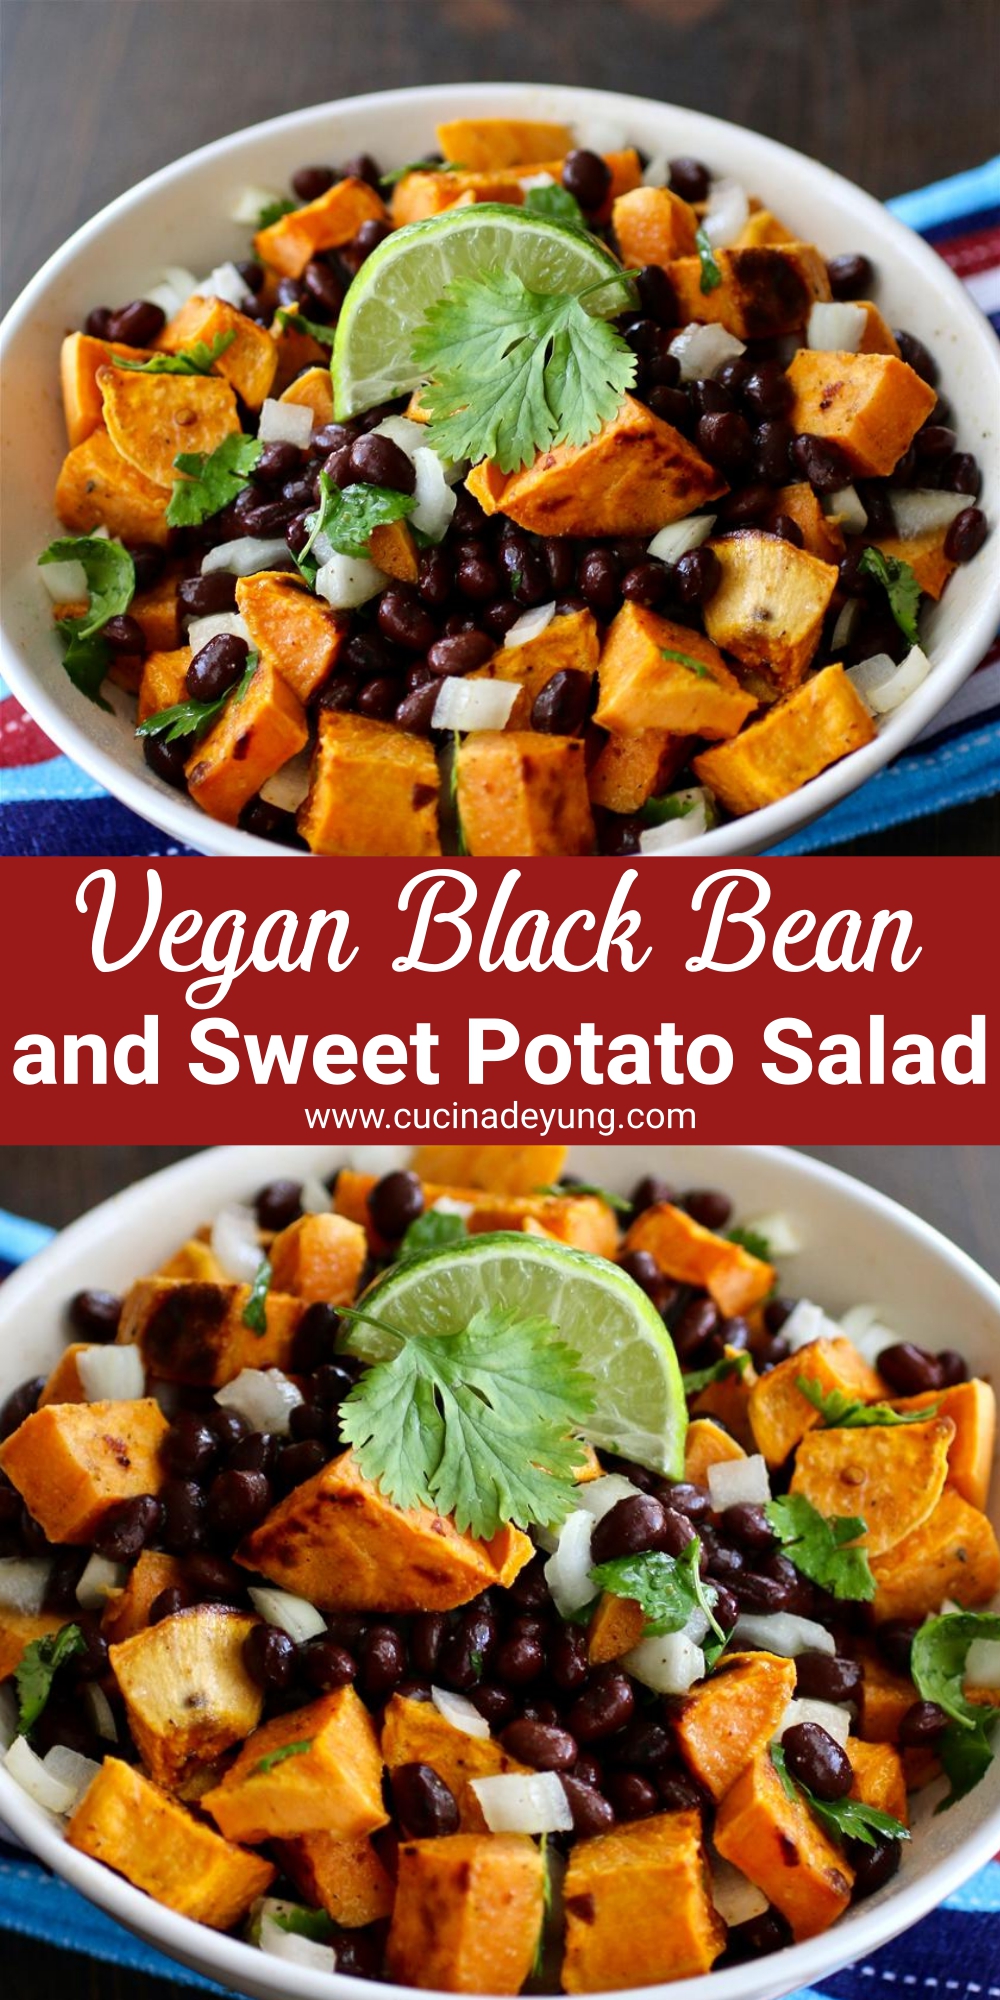 Vegan Black Bean and Sweet Potato Salad Recipe - Cucinadeyung